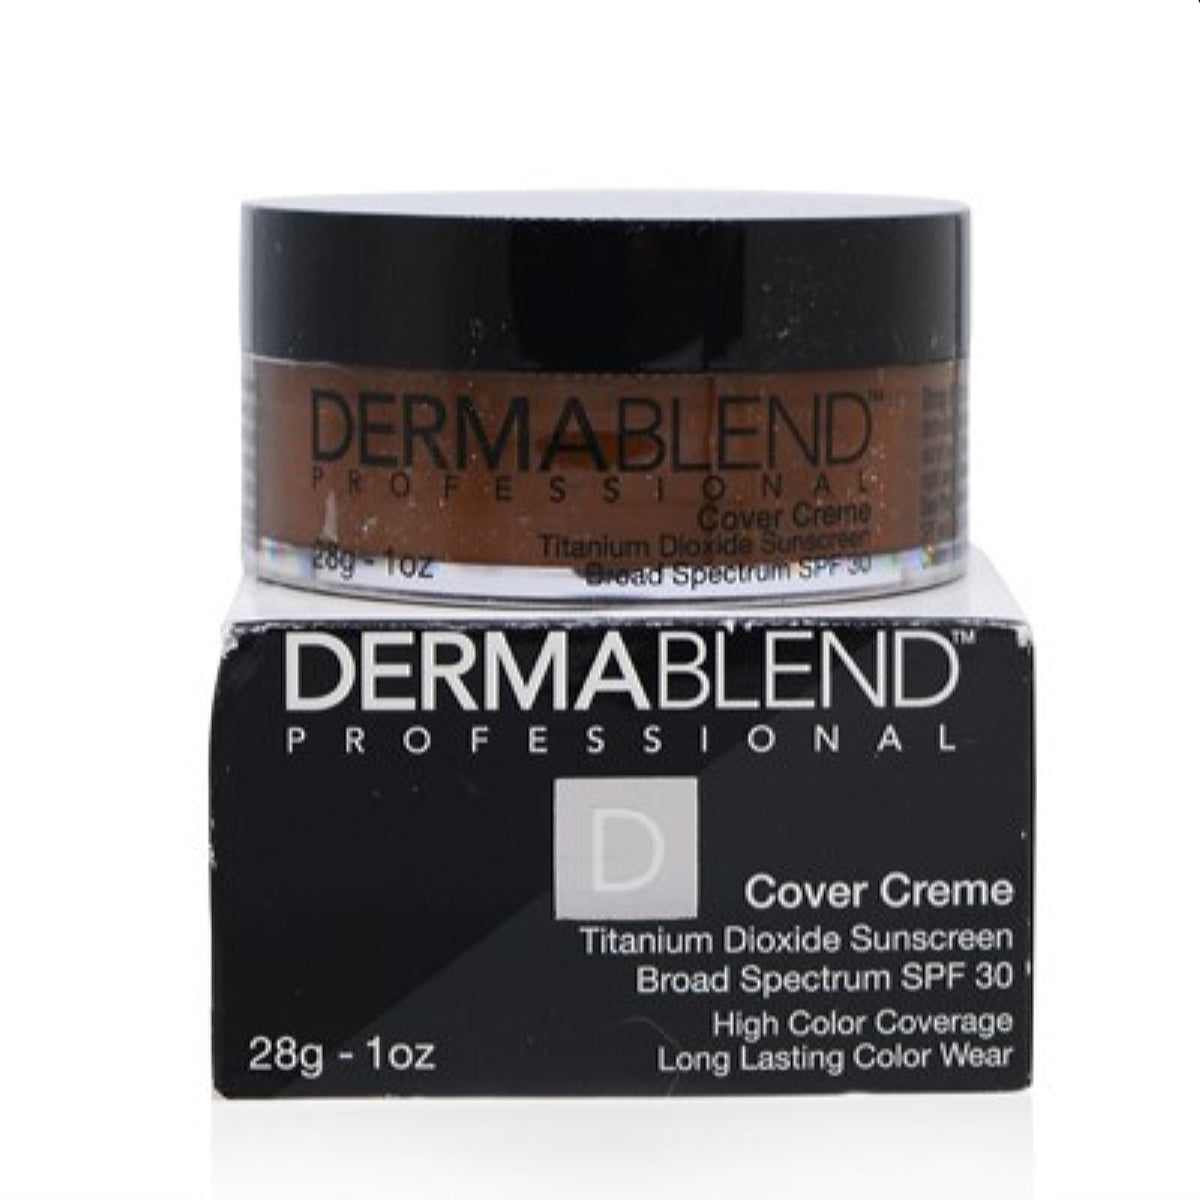 Dermablend Cover Creme Foundation Spf 30 (90N Deep Brown) 1.0 Oz (28 Ml)   